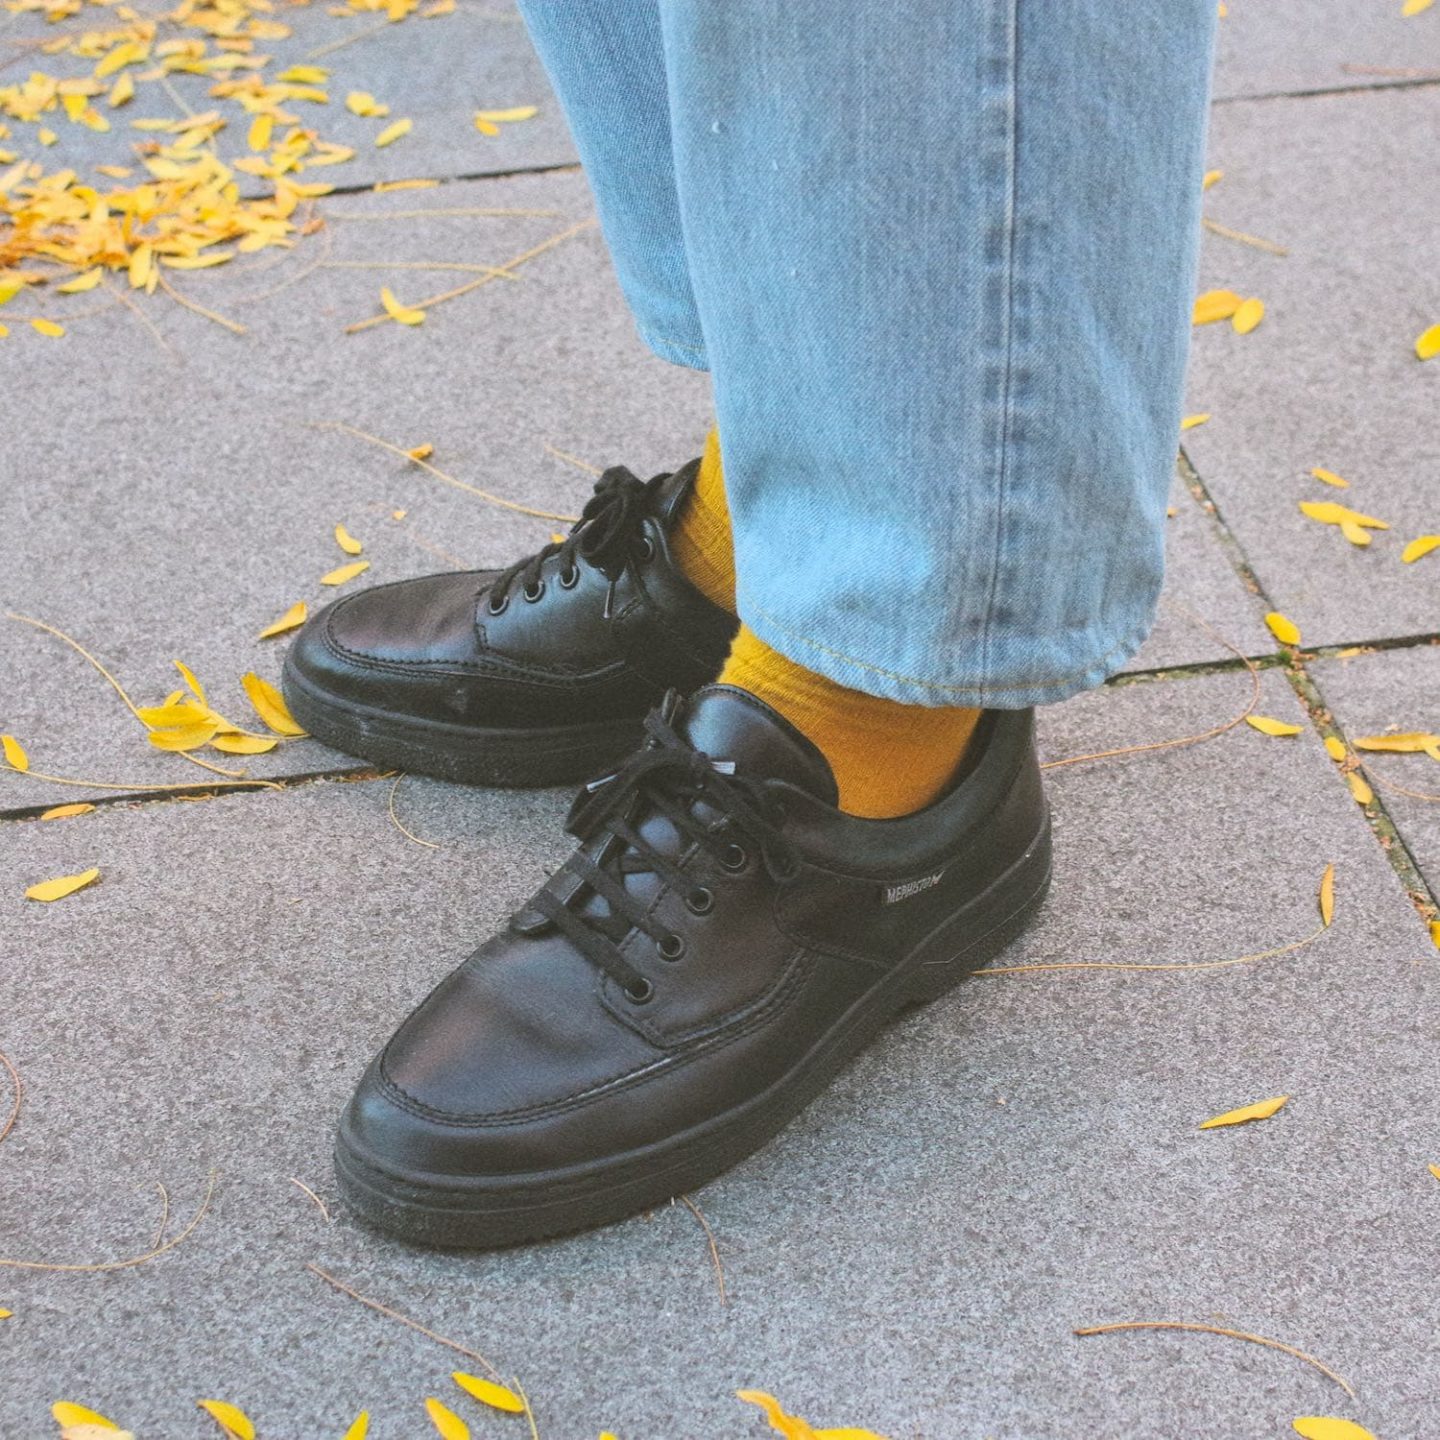 mephisto black shoes chaussettes jaunes